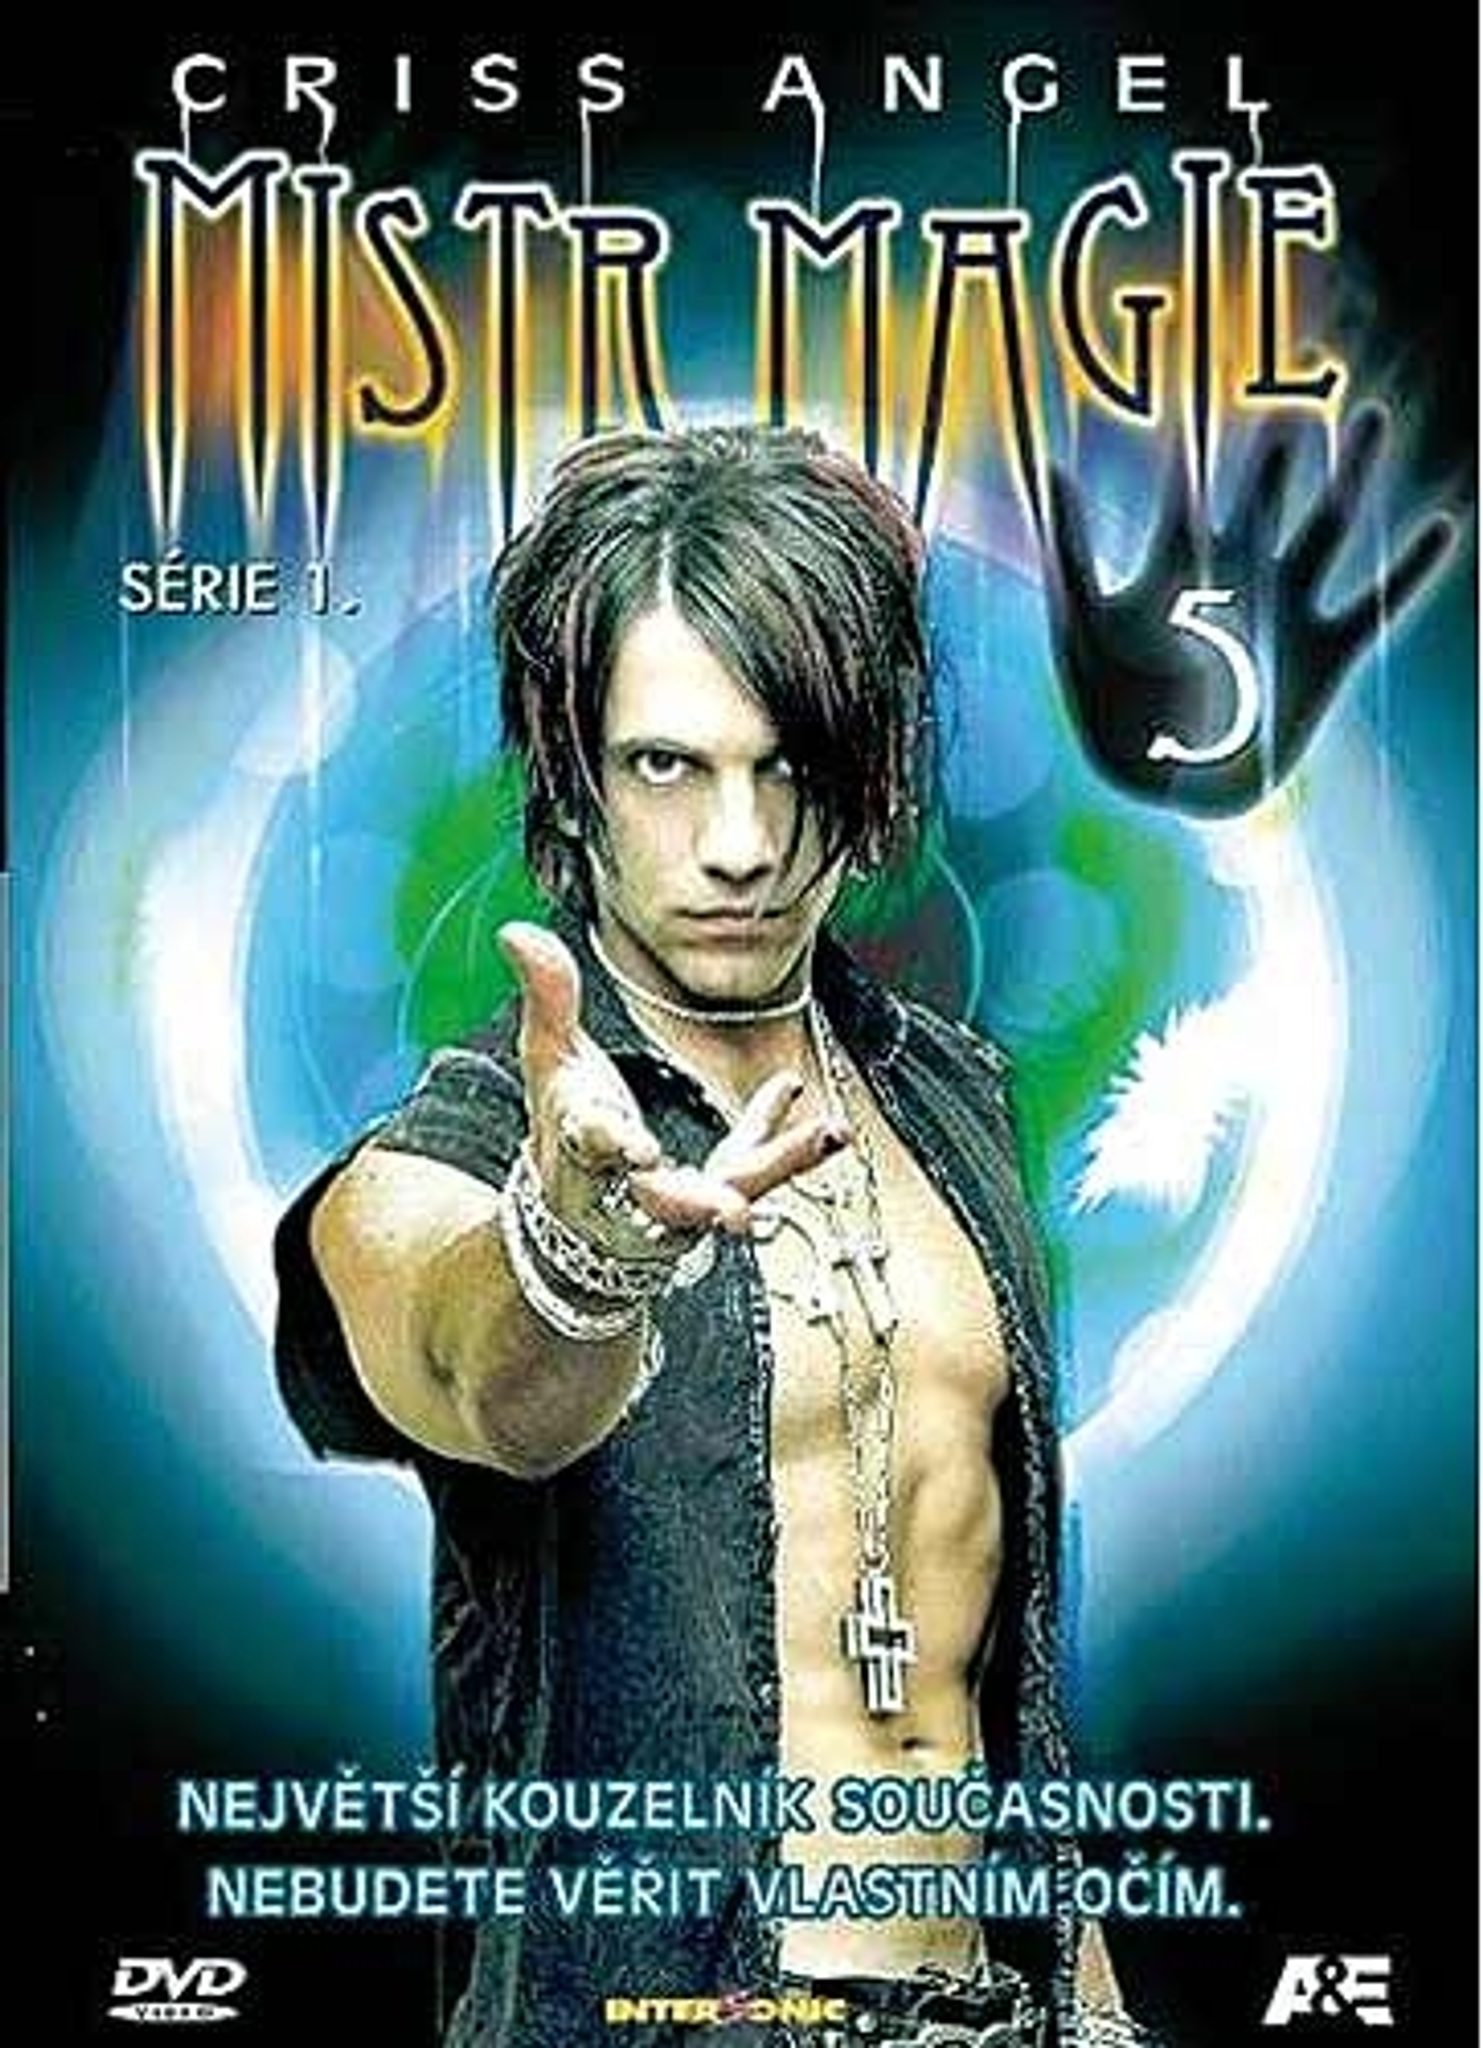 DVD Criss Angel Mistr magie srie 1 5